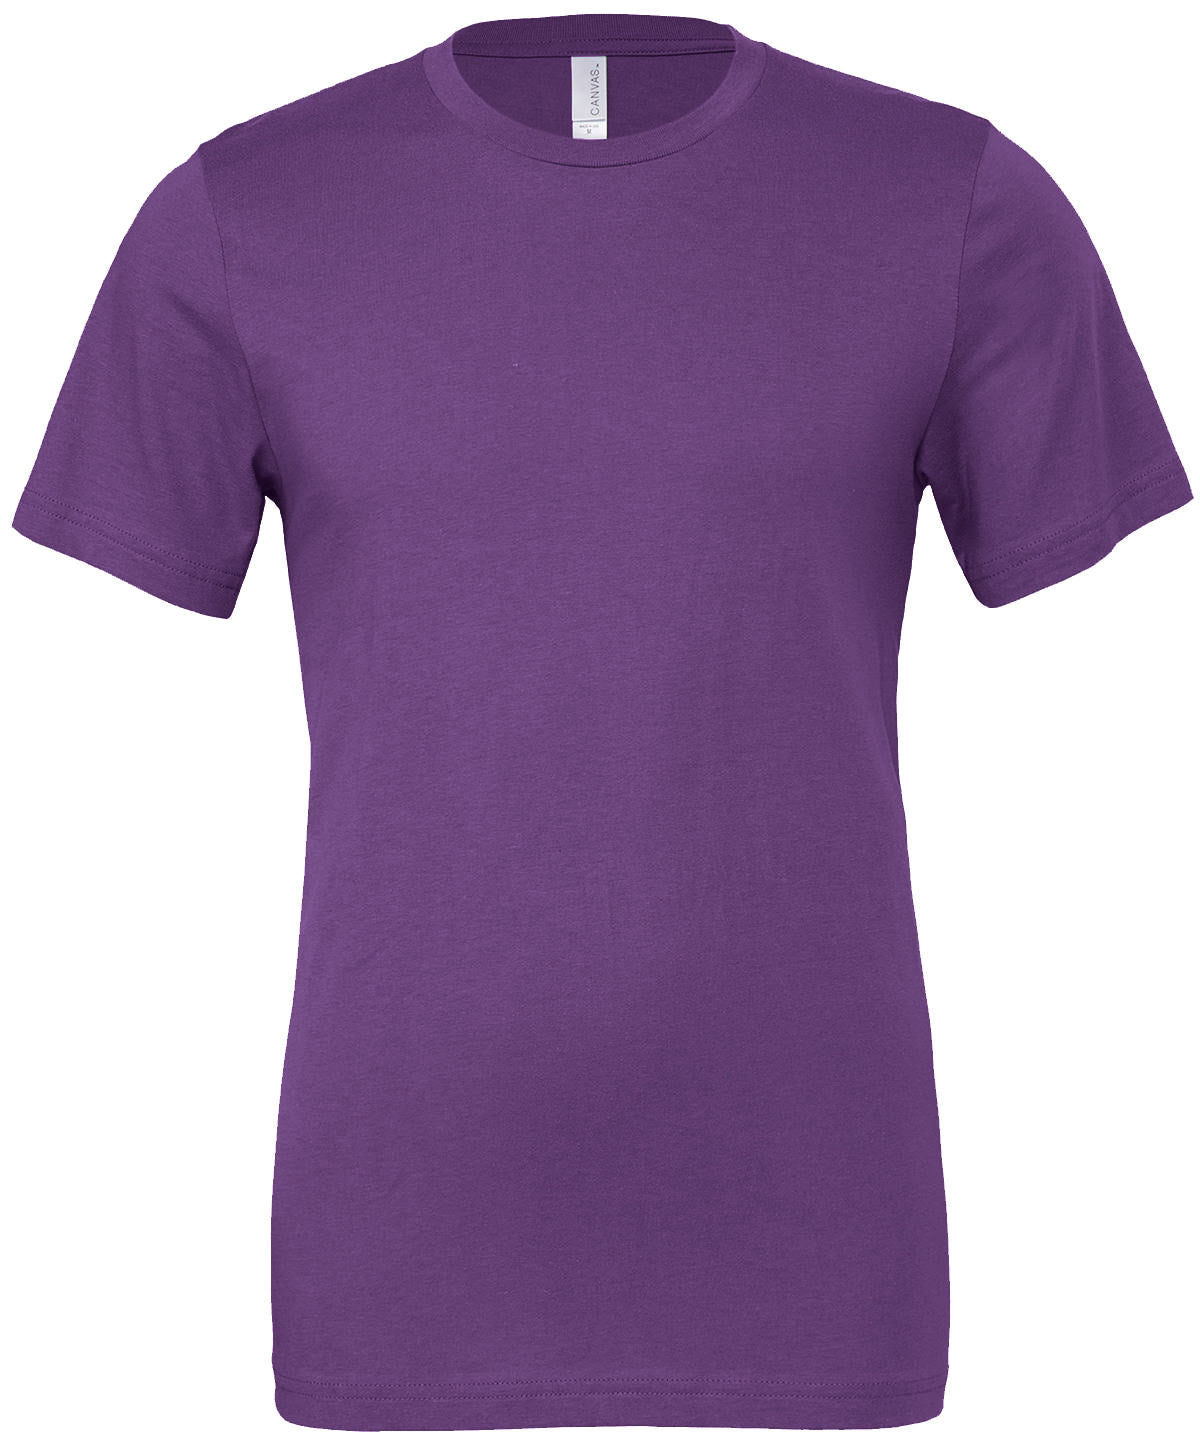 Bella Canvas Unisex Jersey crew neck t-shirt Royal Purple